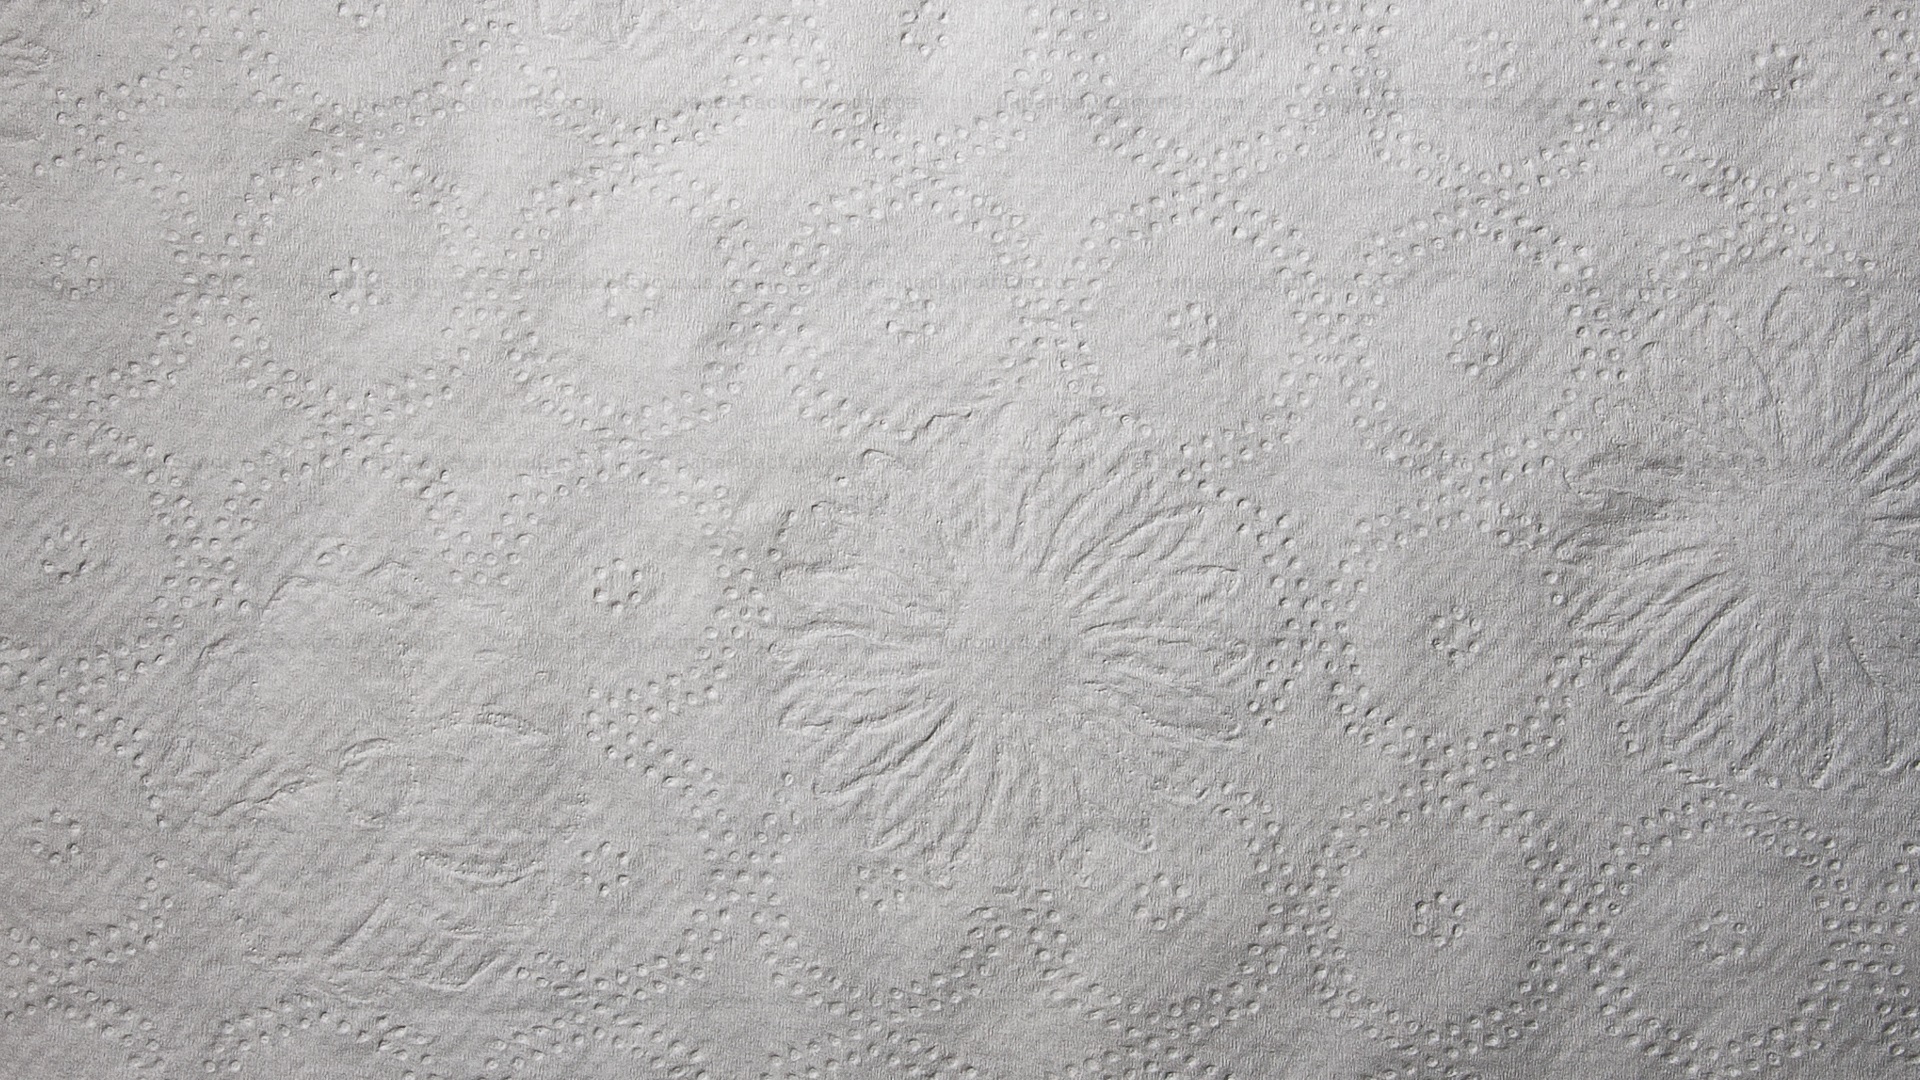 Floral Texture White Paper Tisue Wallpaper Tissue TextureImage